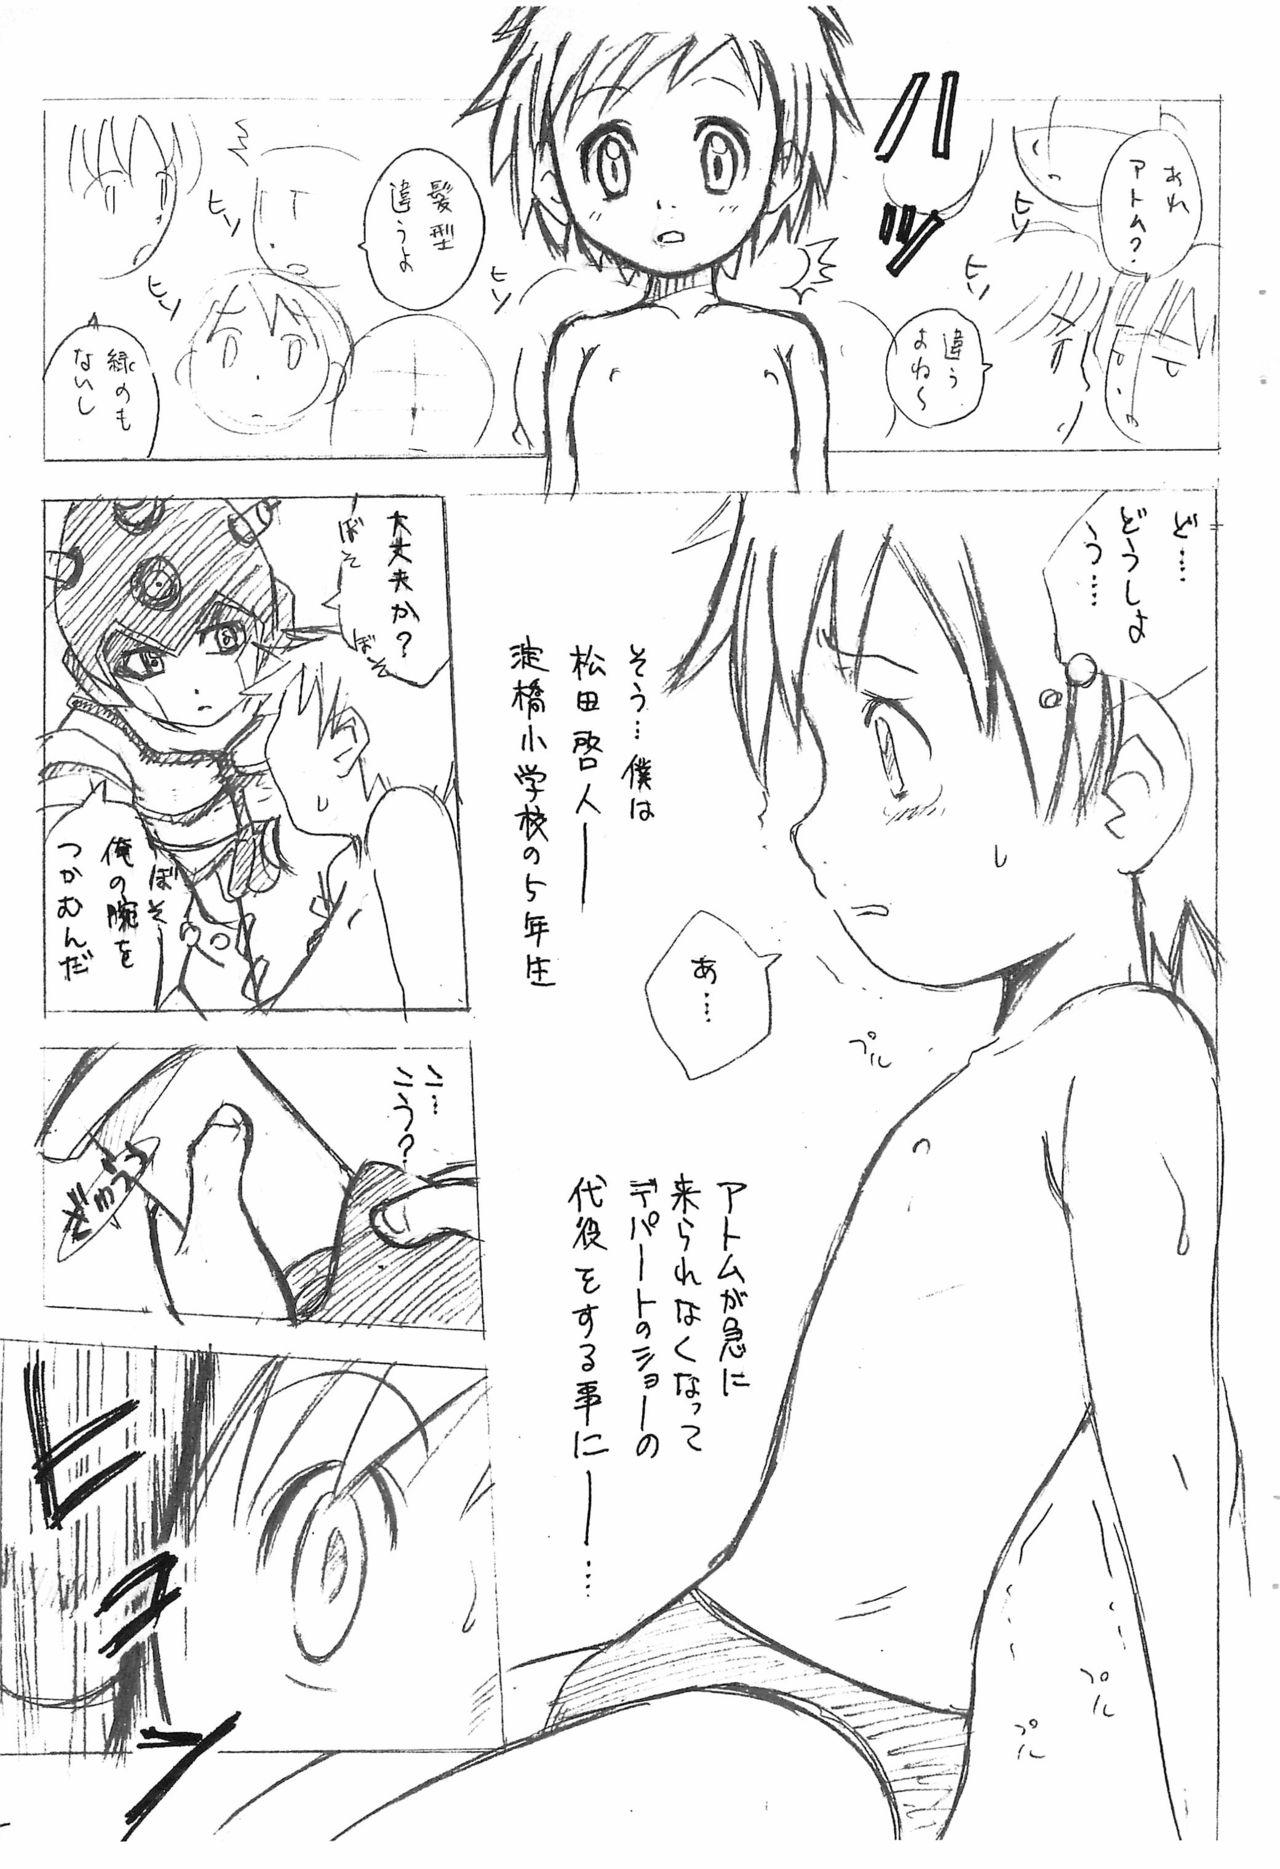 Bath Tetsuwan Takato - Digimon tamers Astro boy Feet - Page 5